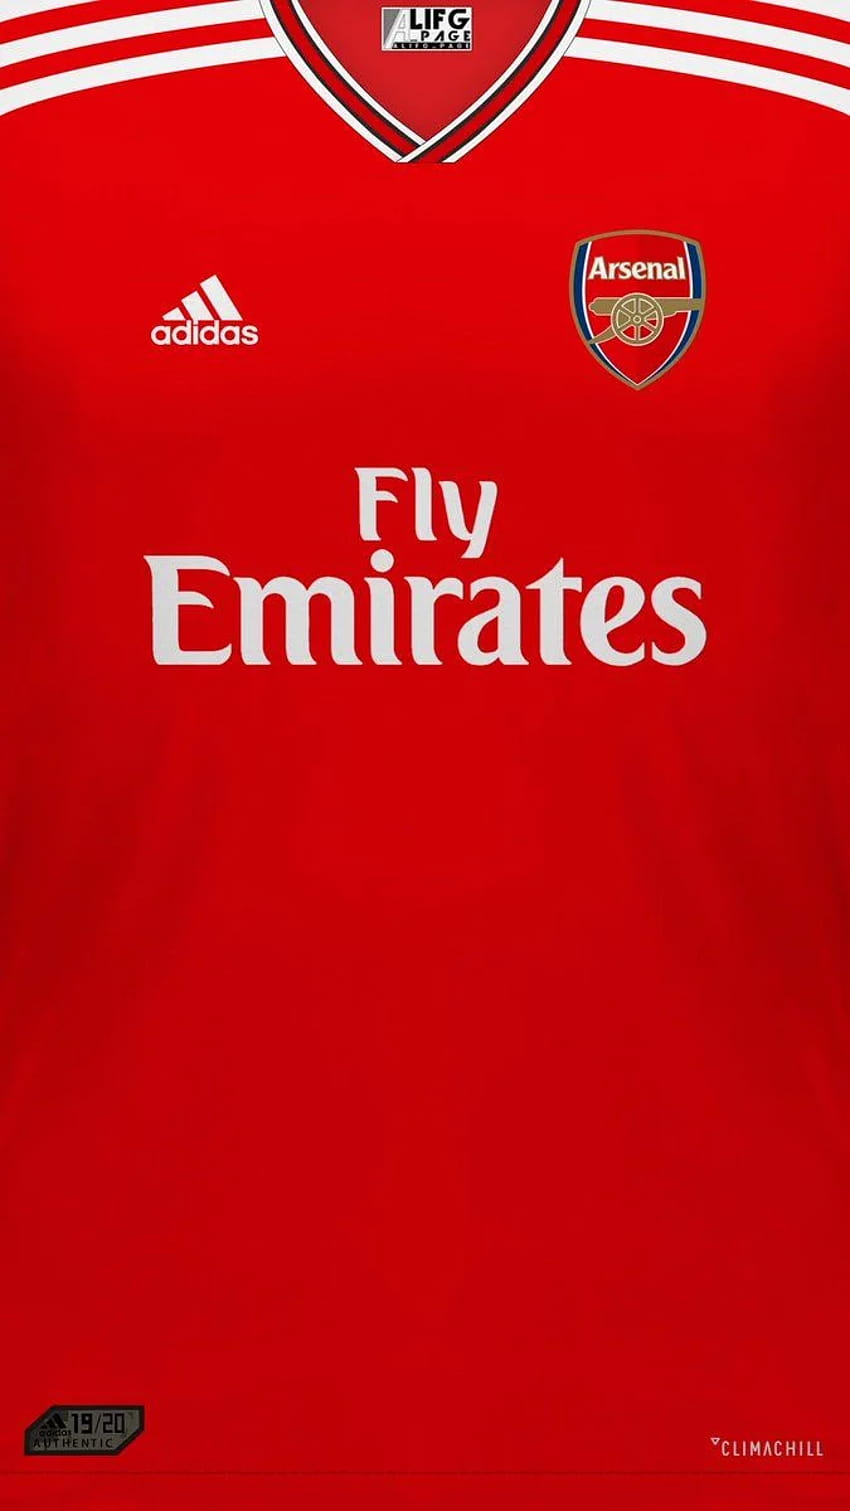 Arsenal 2019 Adidas, arsenal adidas wallpaper ponsel HD